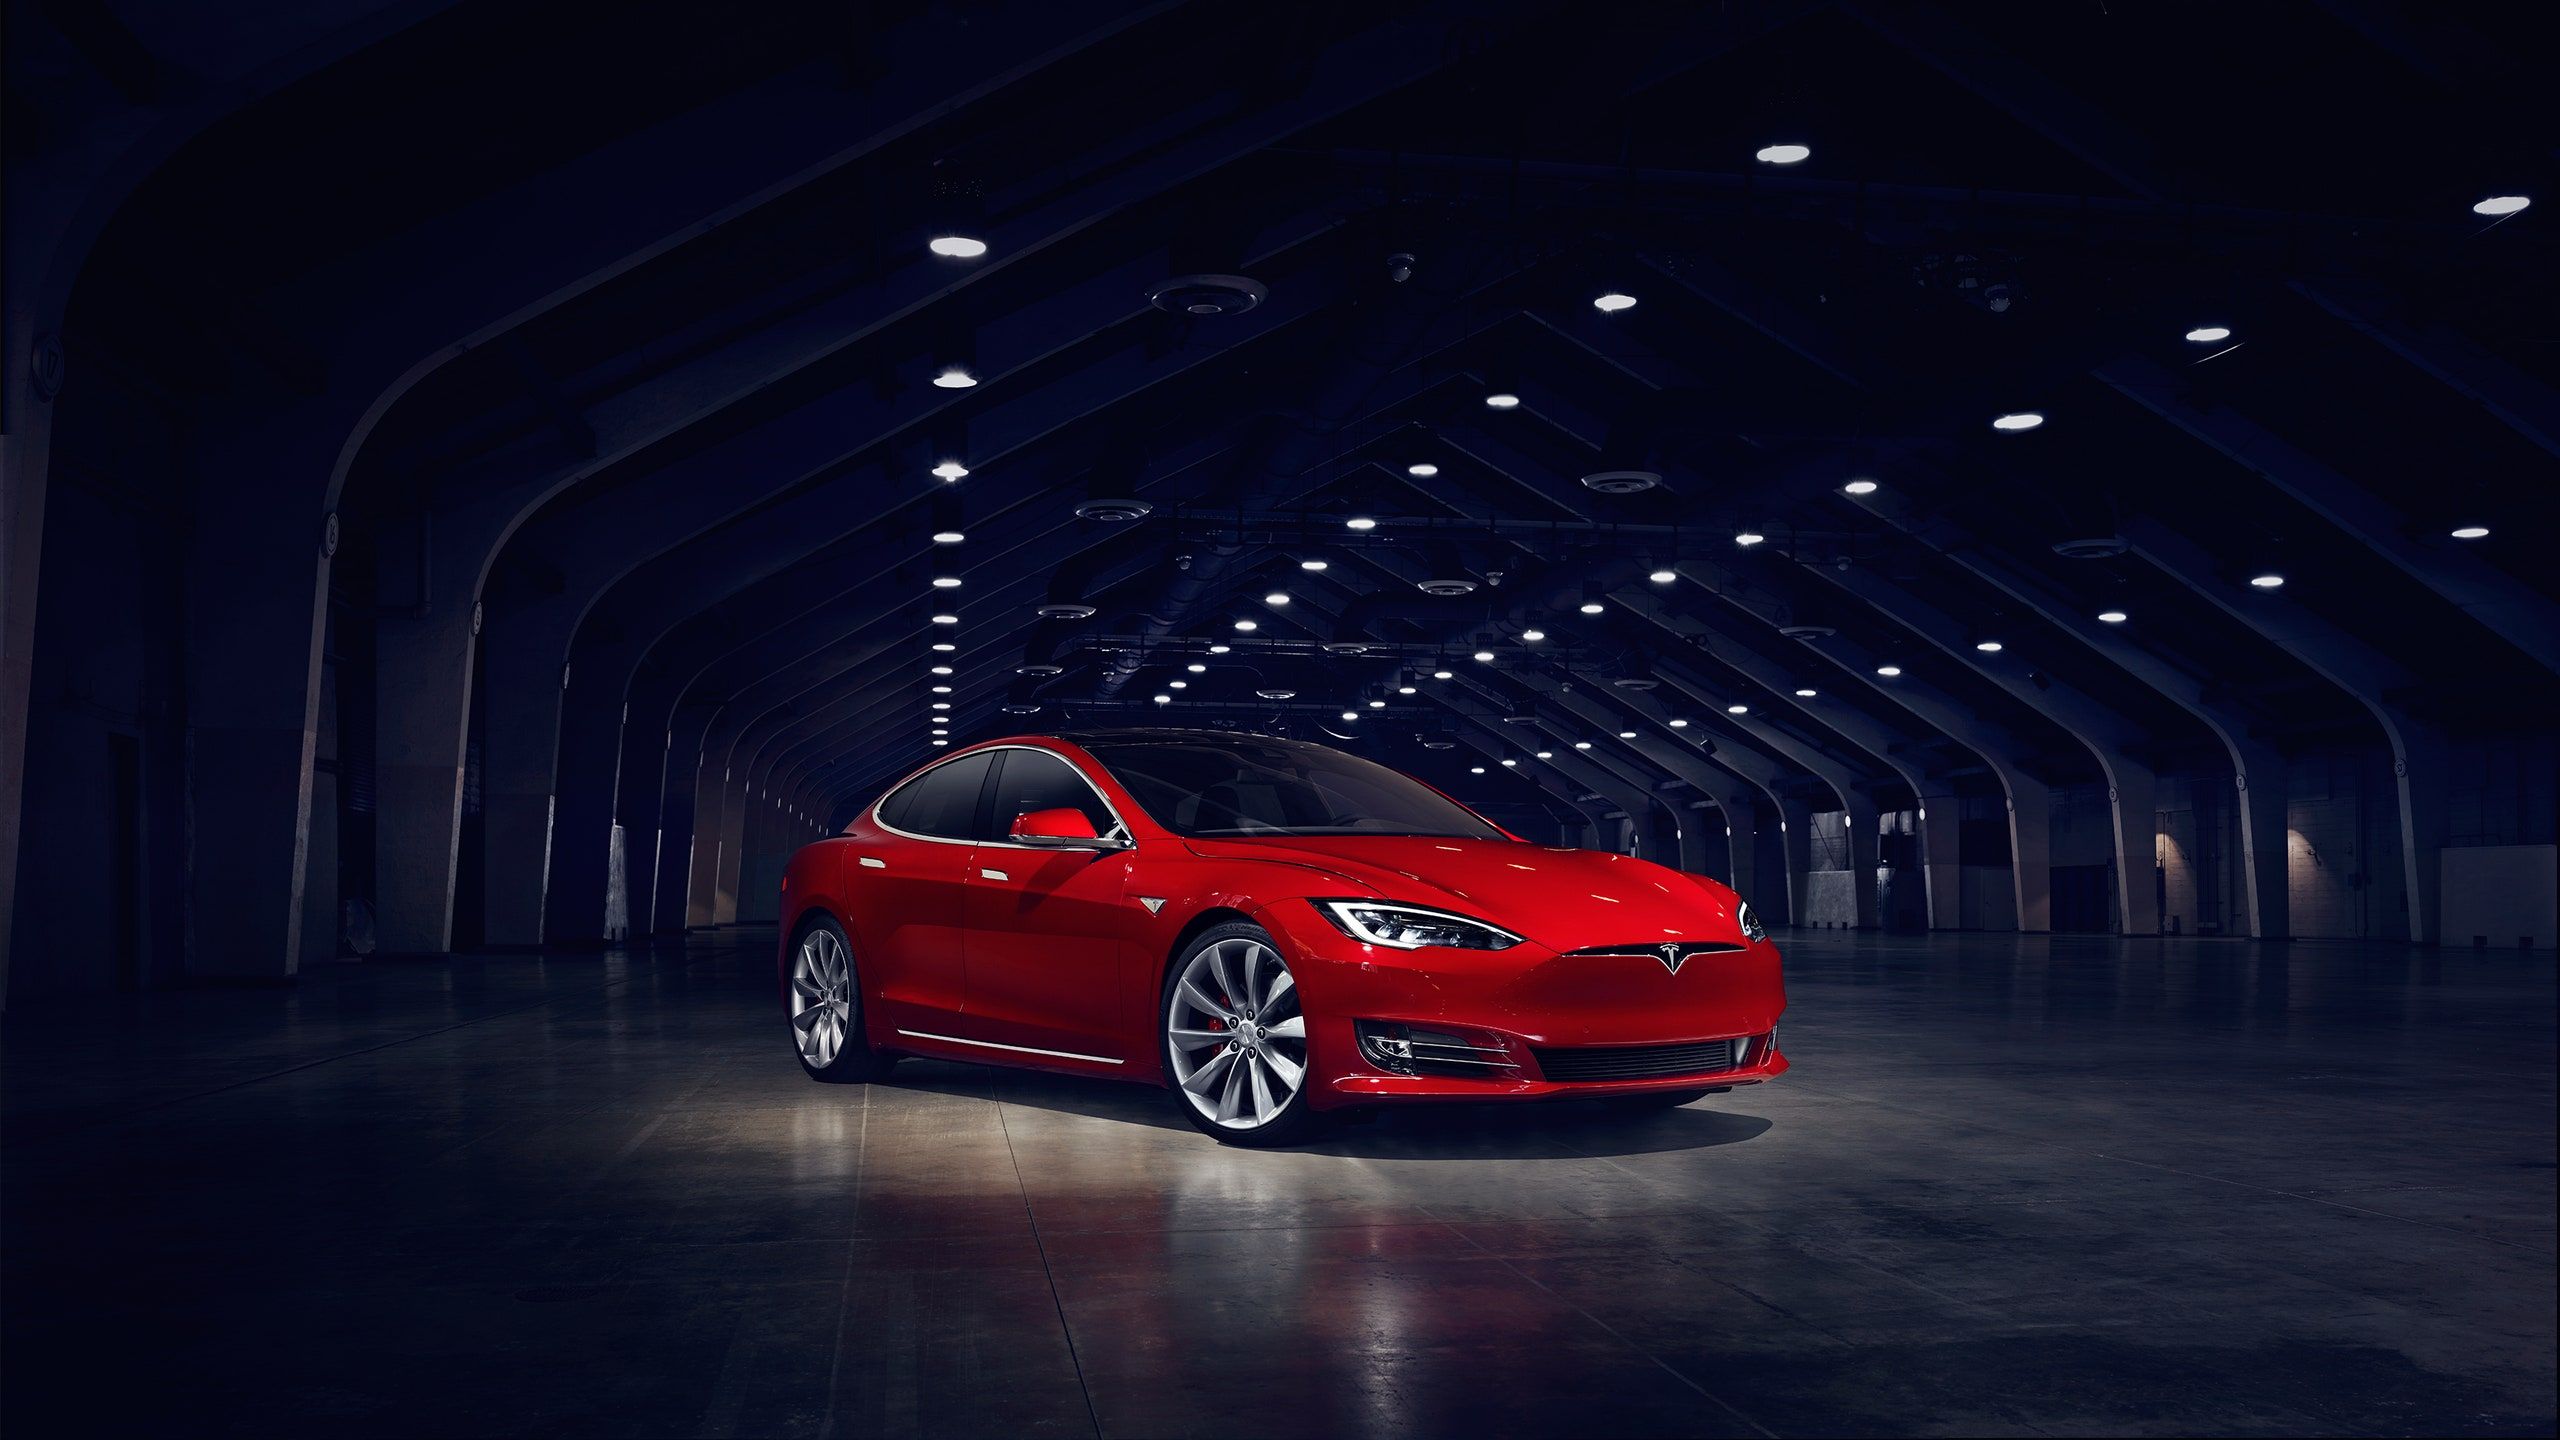 Elon Musk Announces Tesla's New Lower Priced Model S Electric Sedan